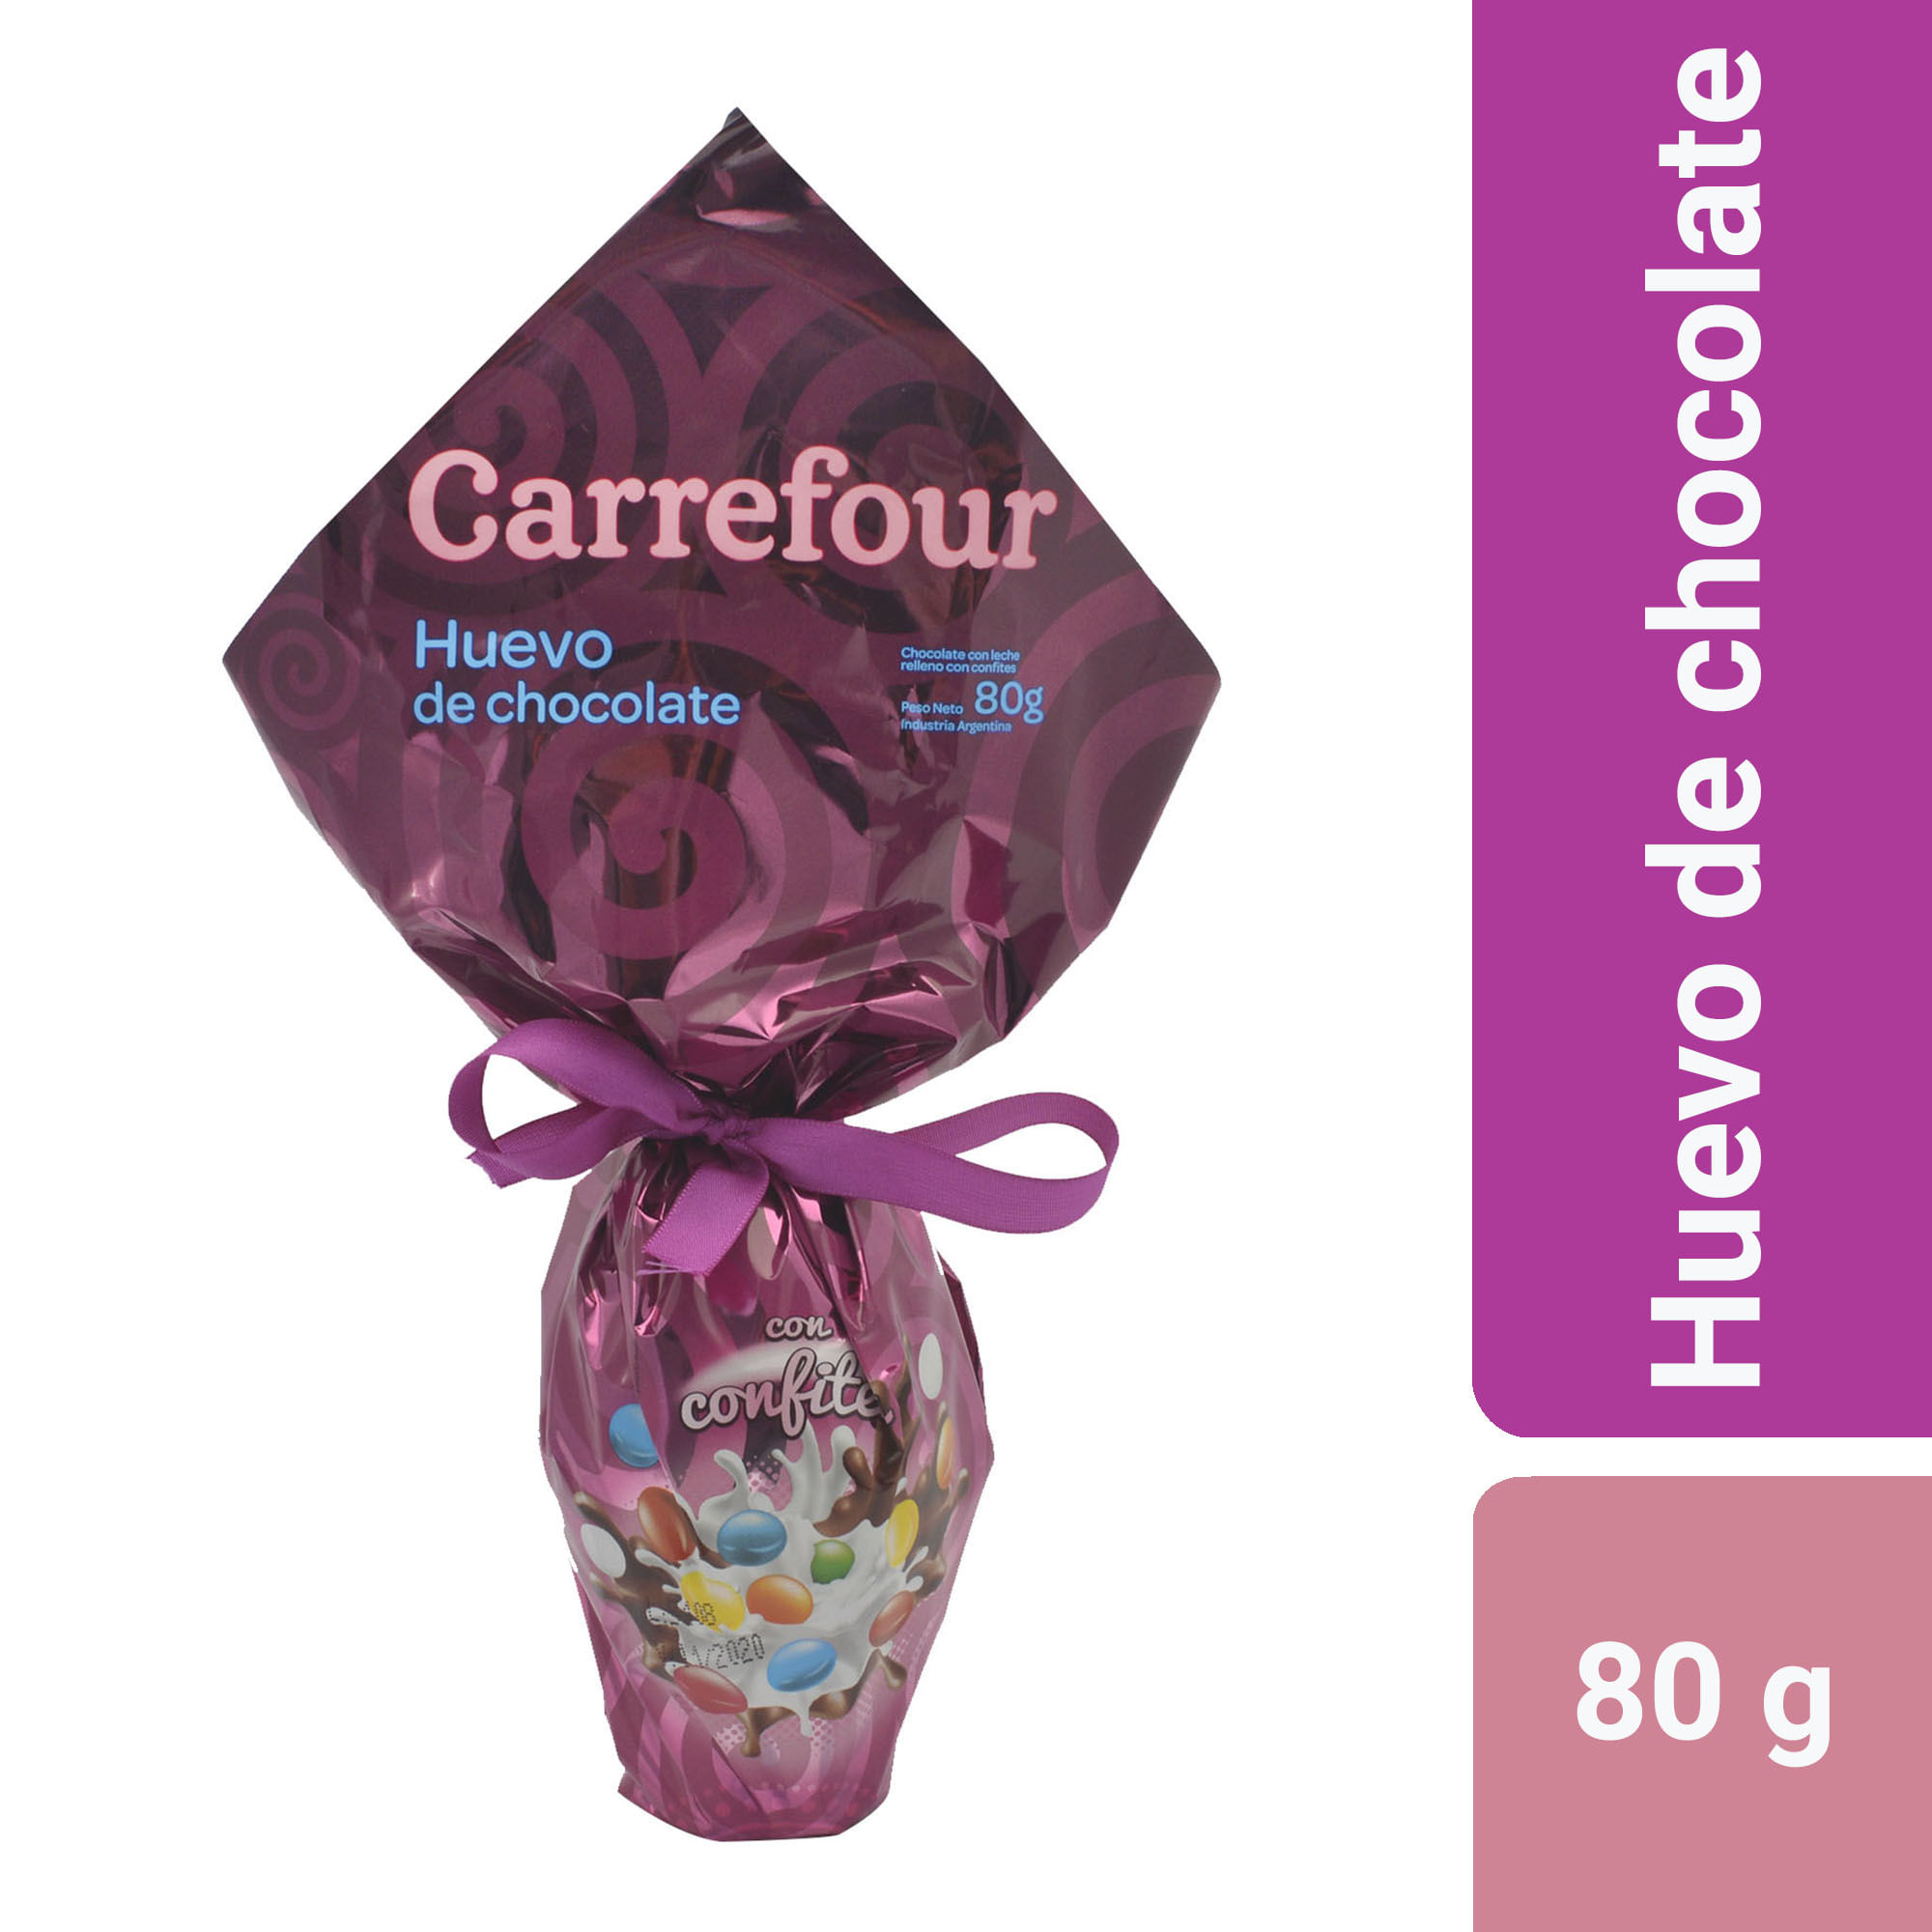 Vacilar Patatas mostrar Huevo Carrefour chocolate con leche 80 g. - Carrefour